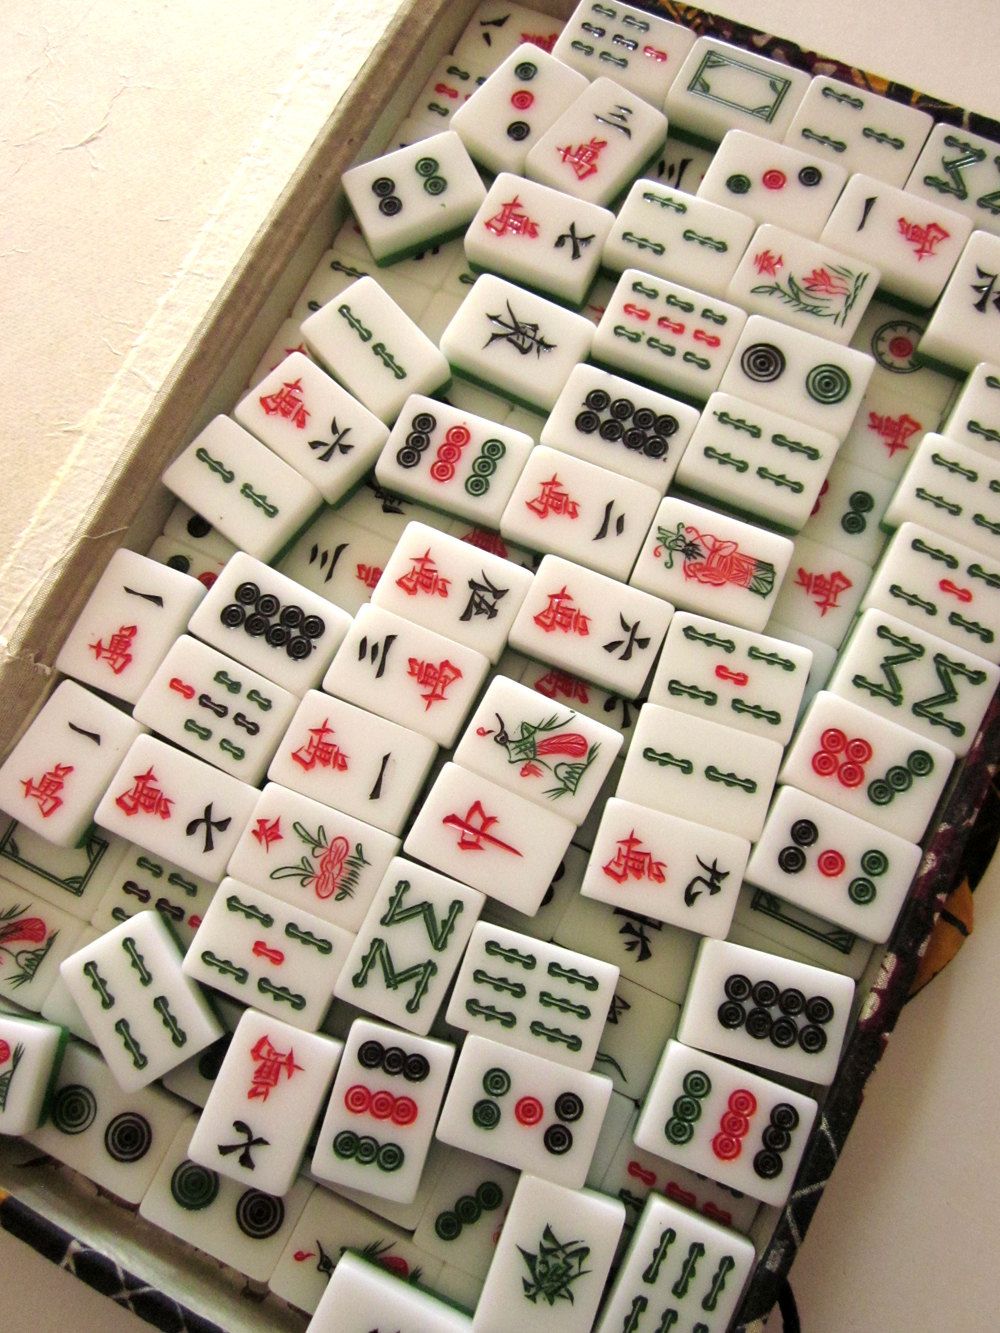 https://upnorthartsinc.com/wp-content/uploads/2019/08/mahjong.jpg